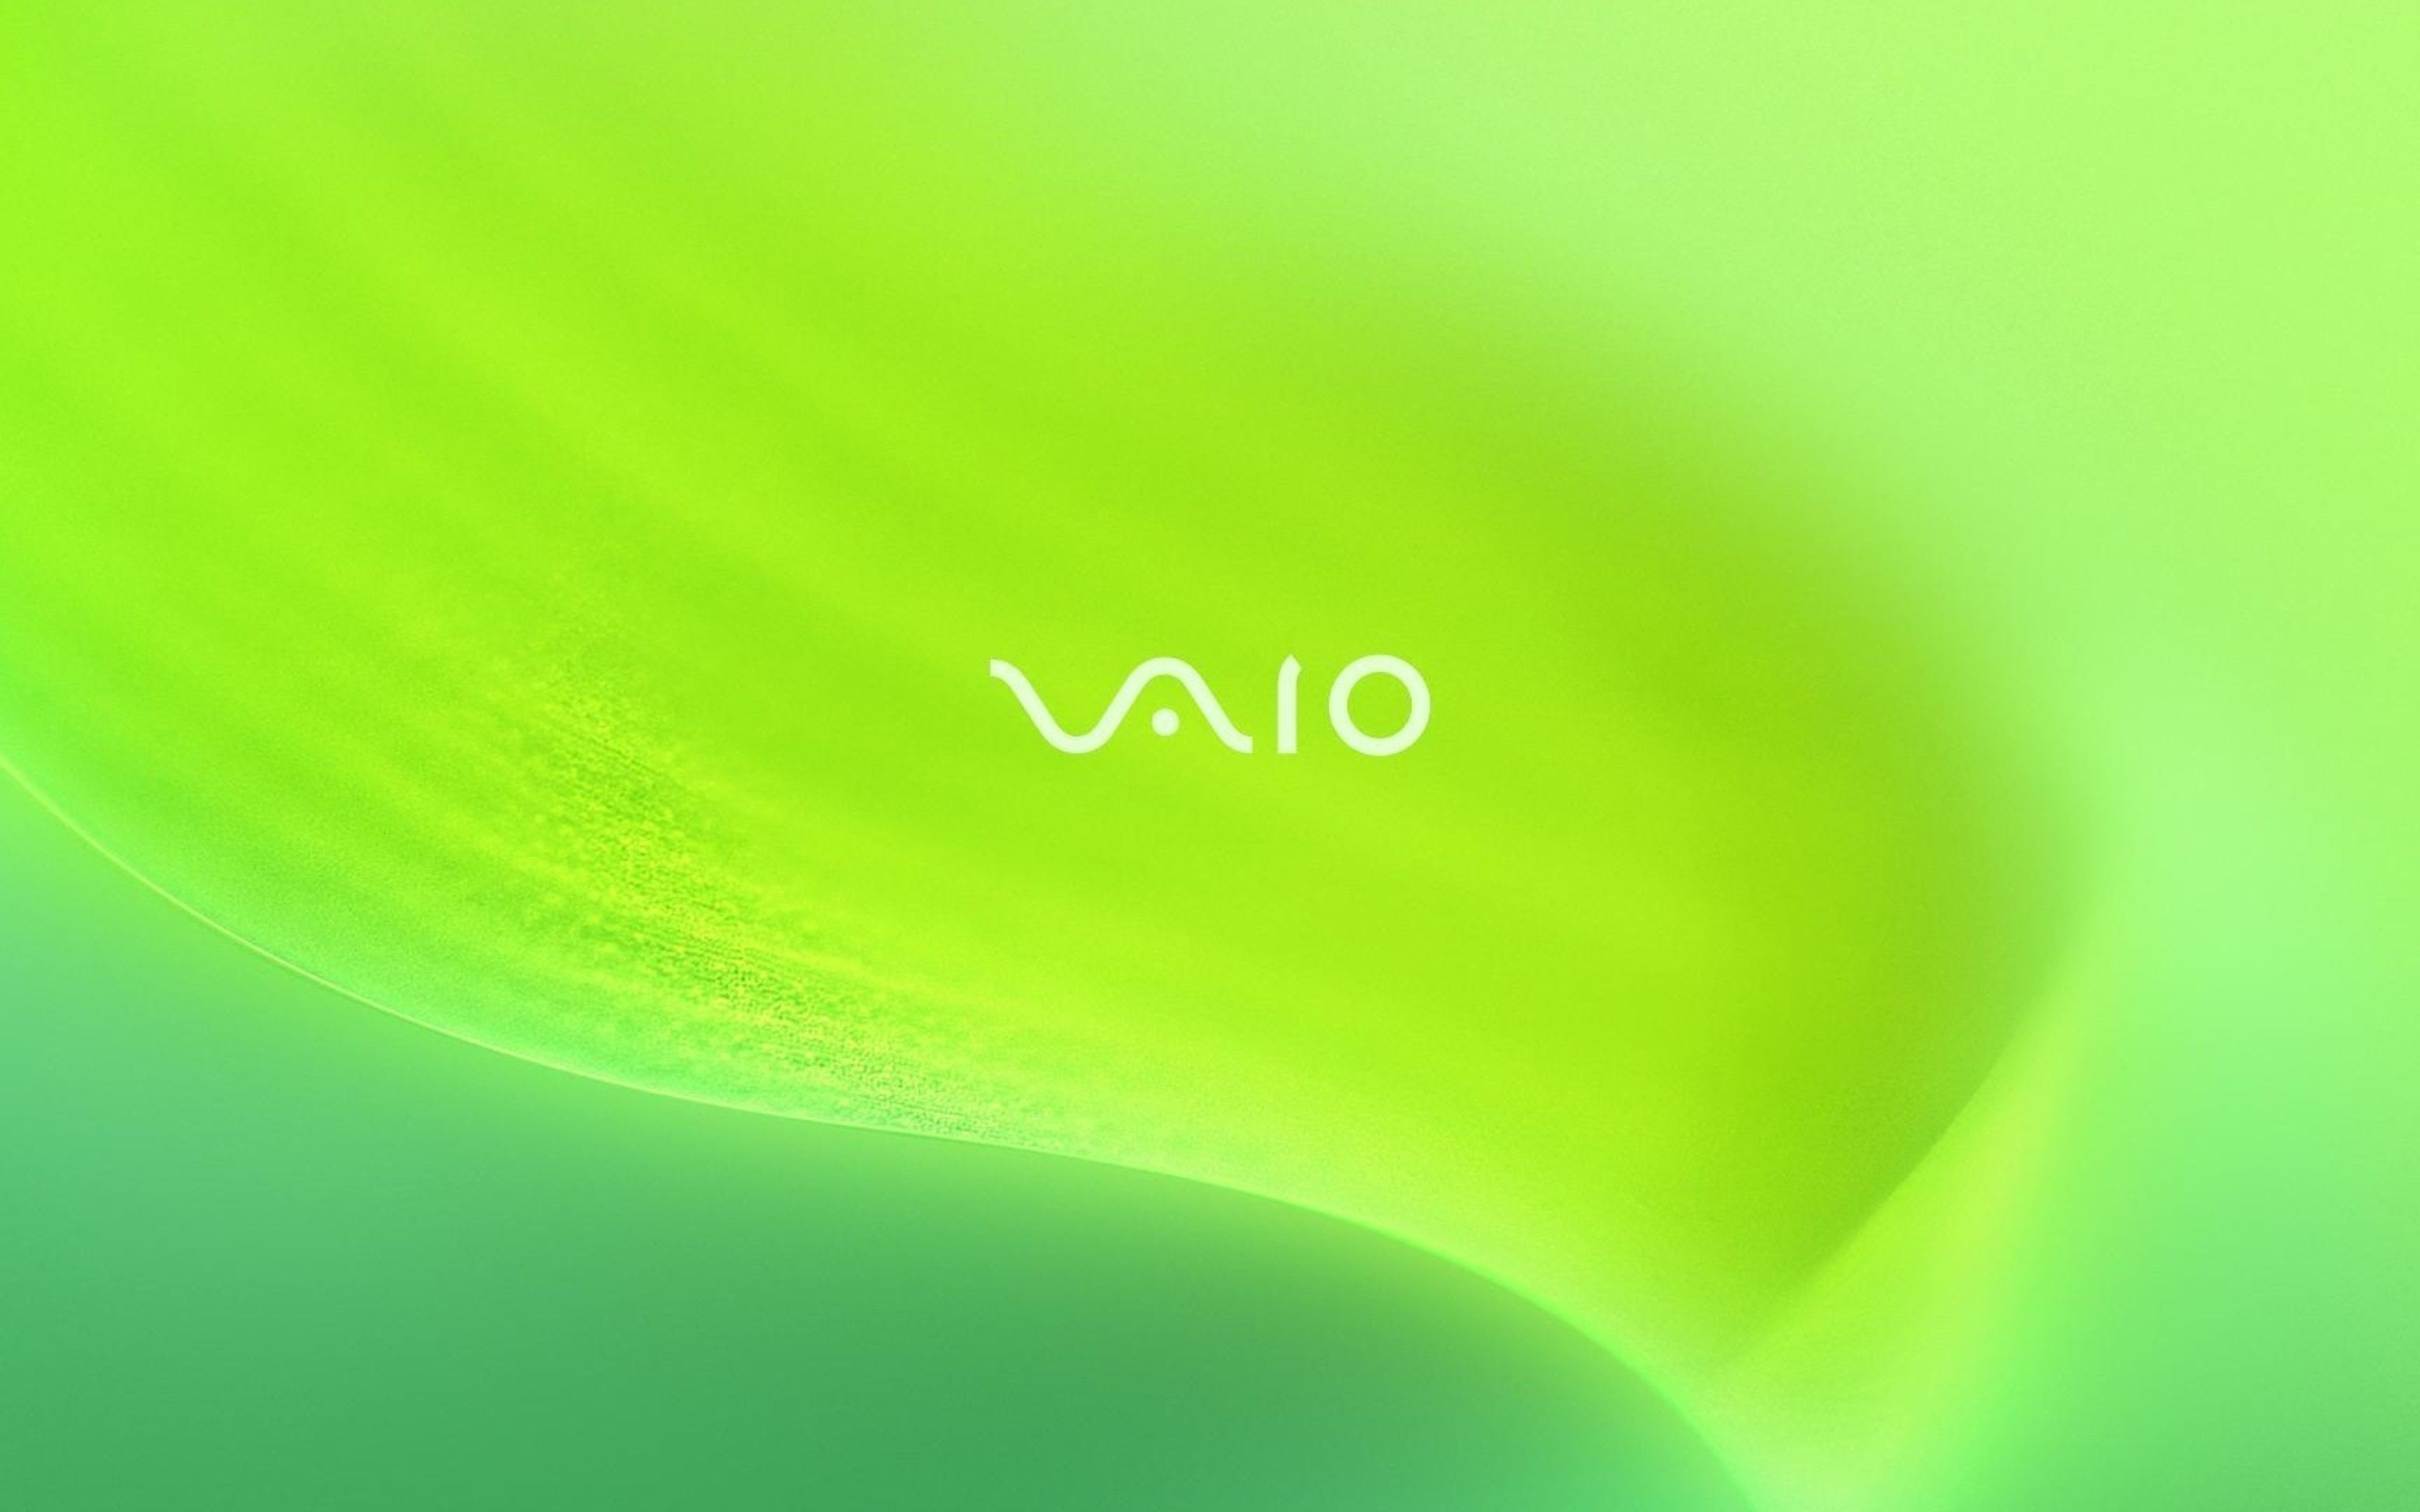 Cool-green-Sony-Vaio-wallpaper-Brand-wallpaper2you_5120x3200.jpg